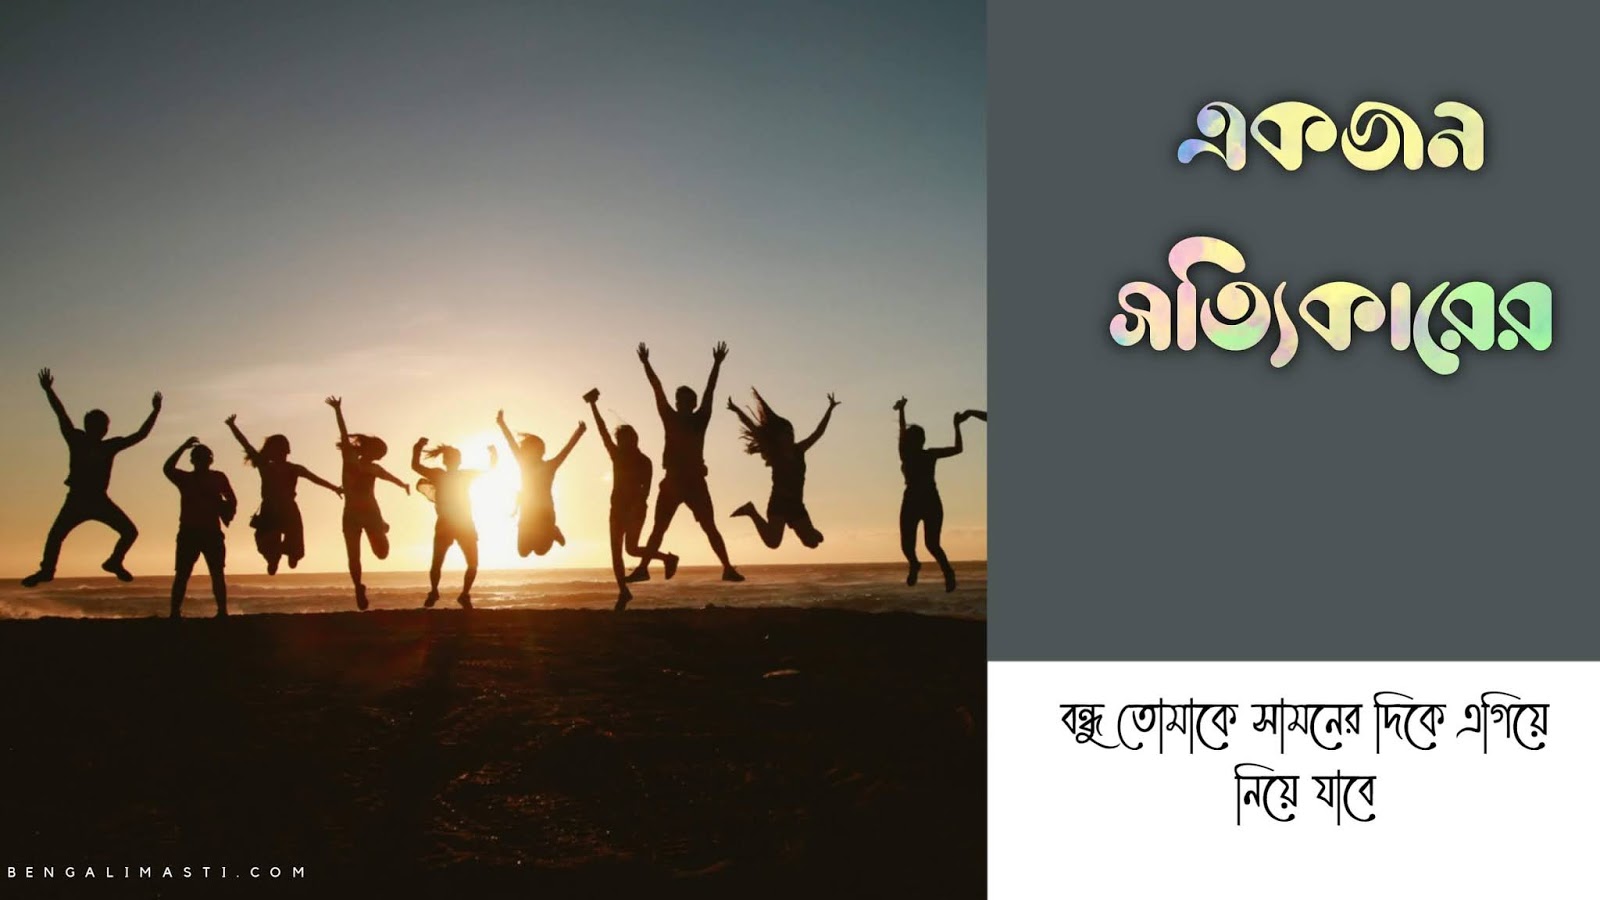 101 Short Bengali Friendship Quotes for Best Friends - Bengalimasti